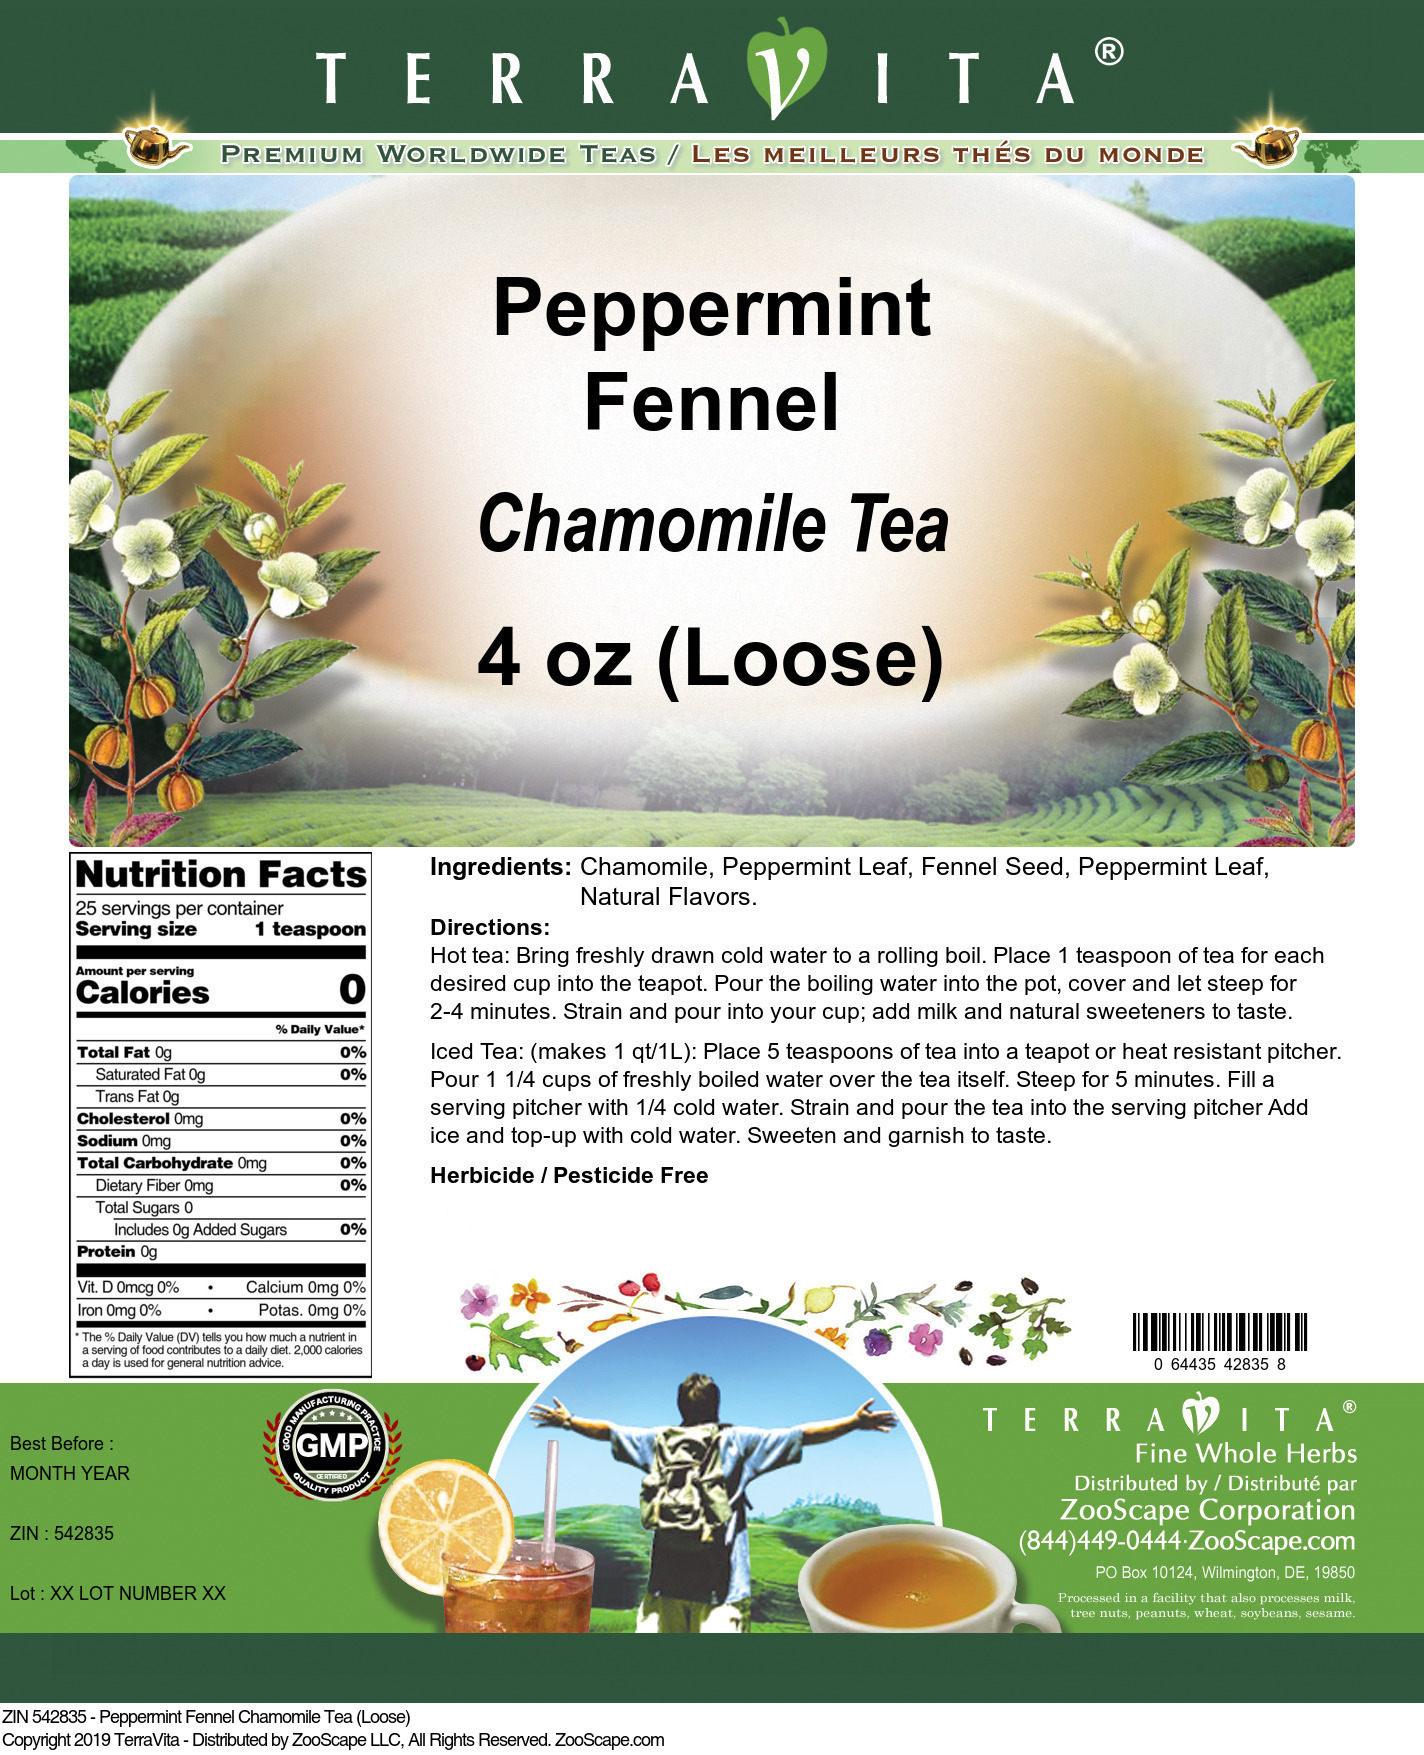 Peppermint Fennel Chamomile Tea (Loose) - Label